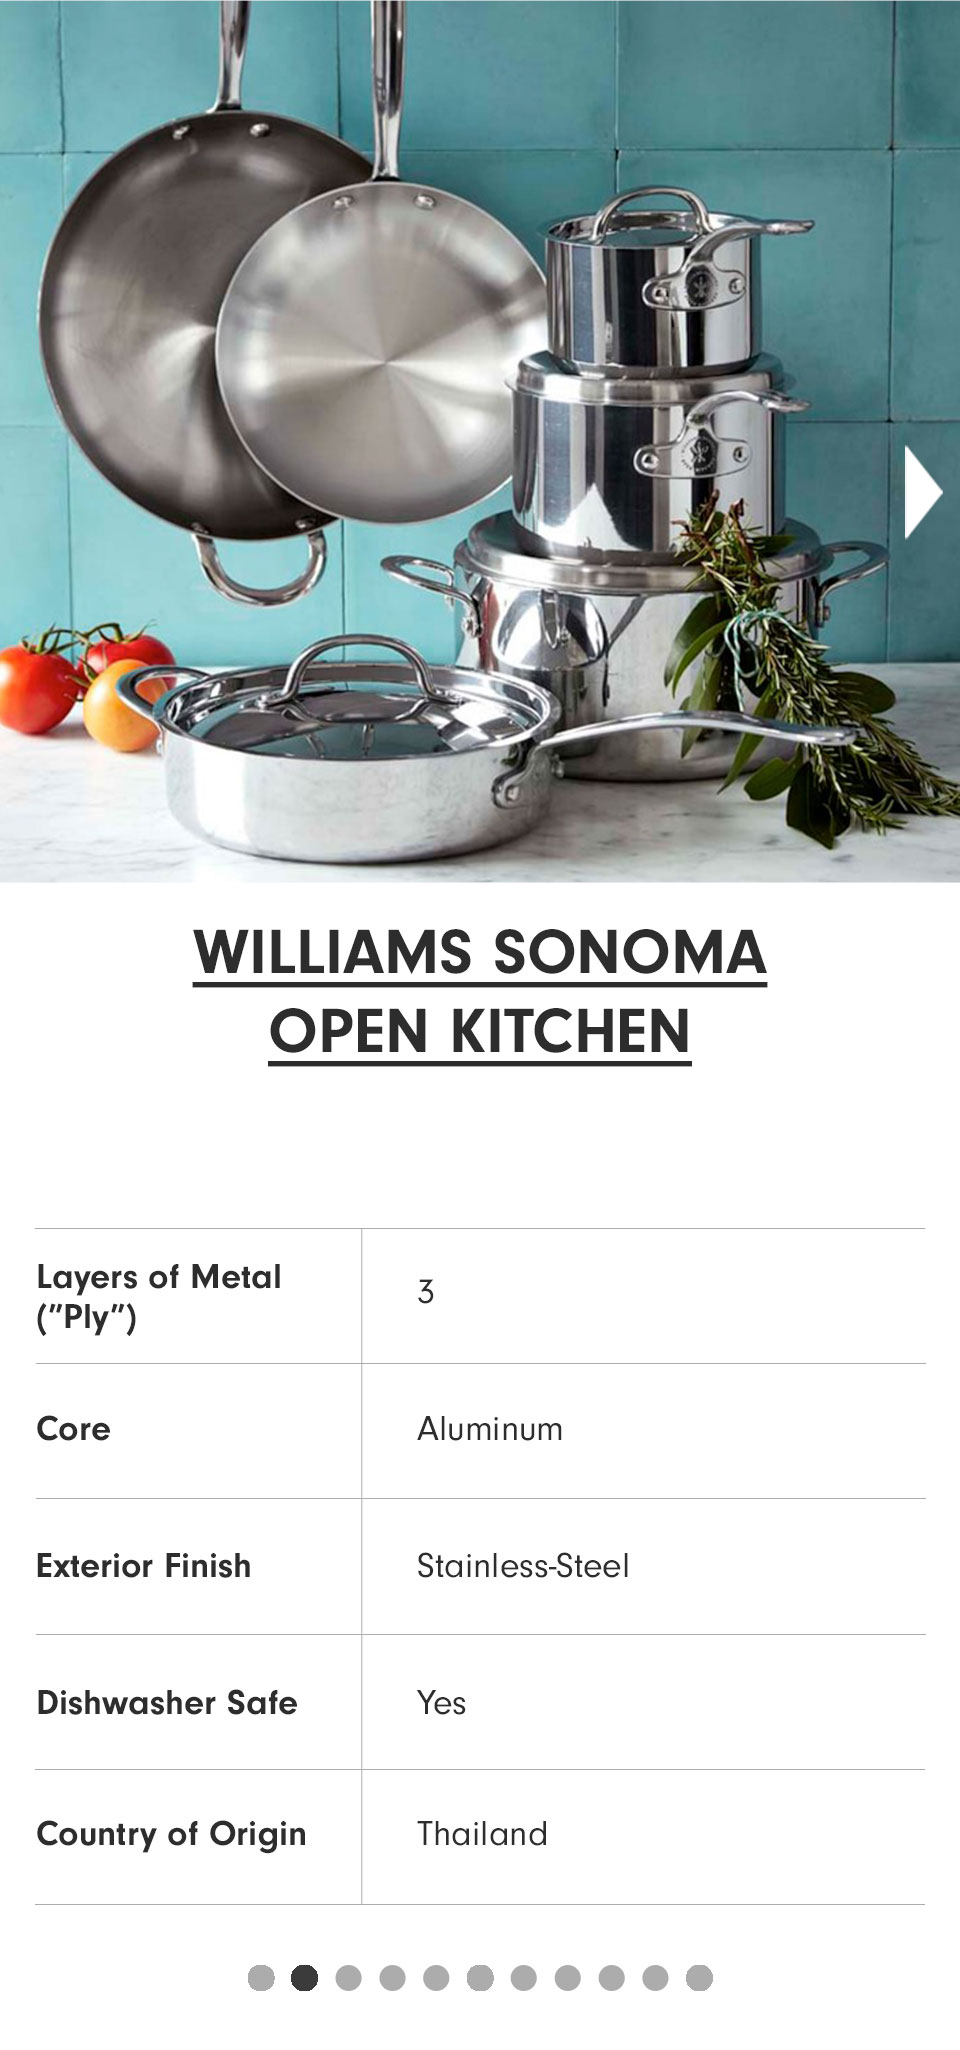 Williams Sonoma Open Kitchen >